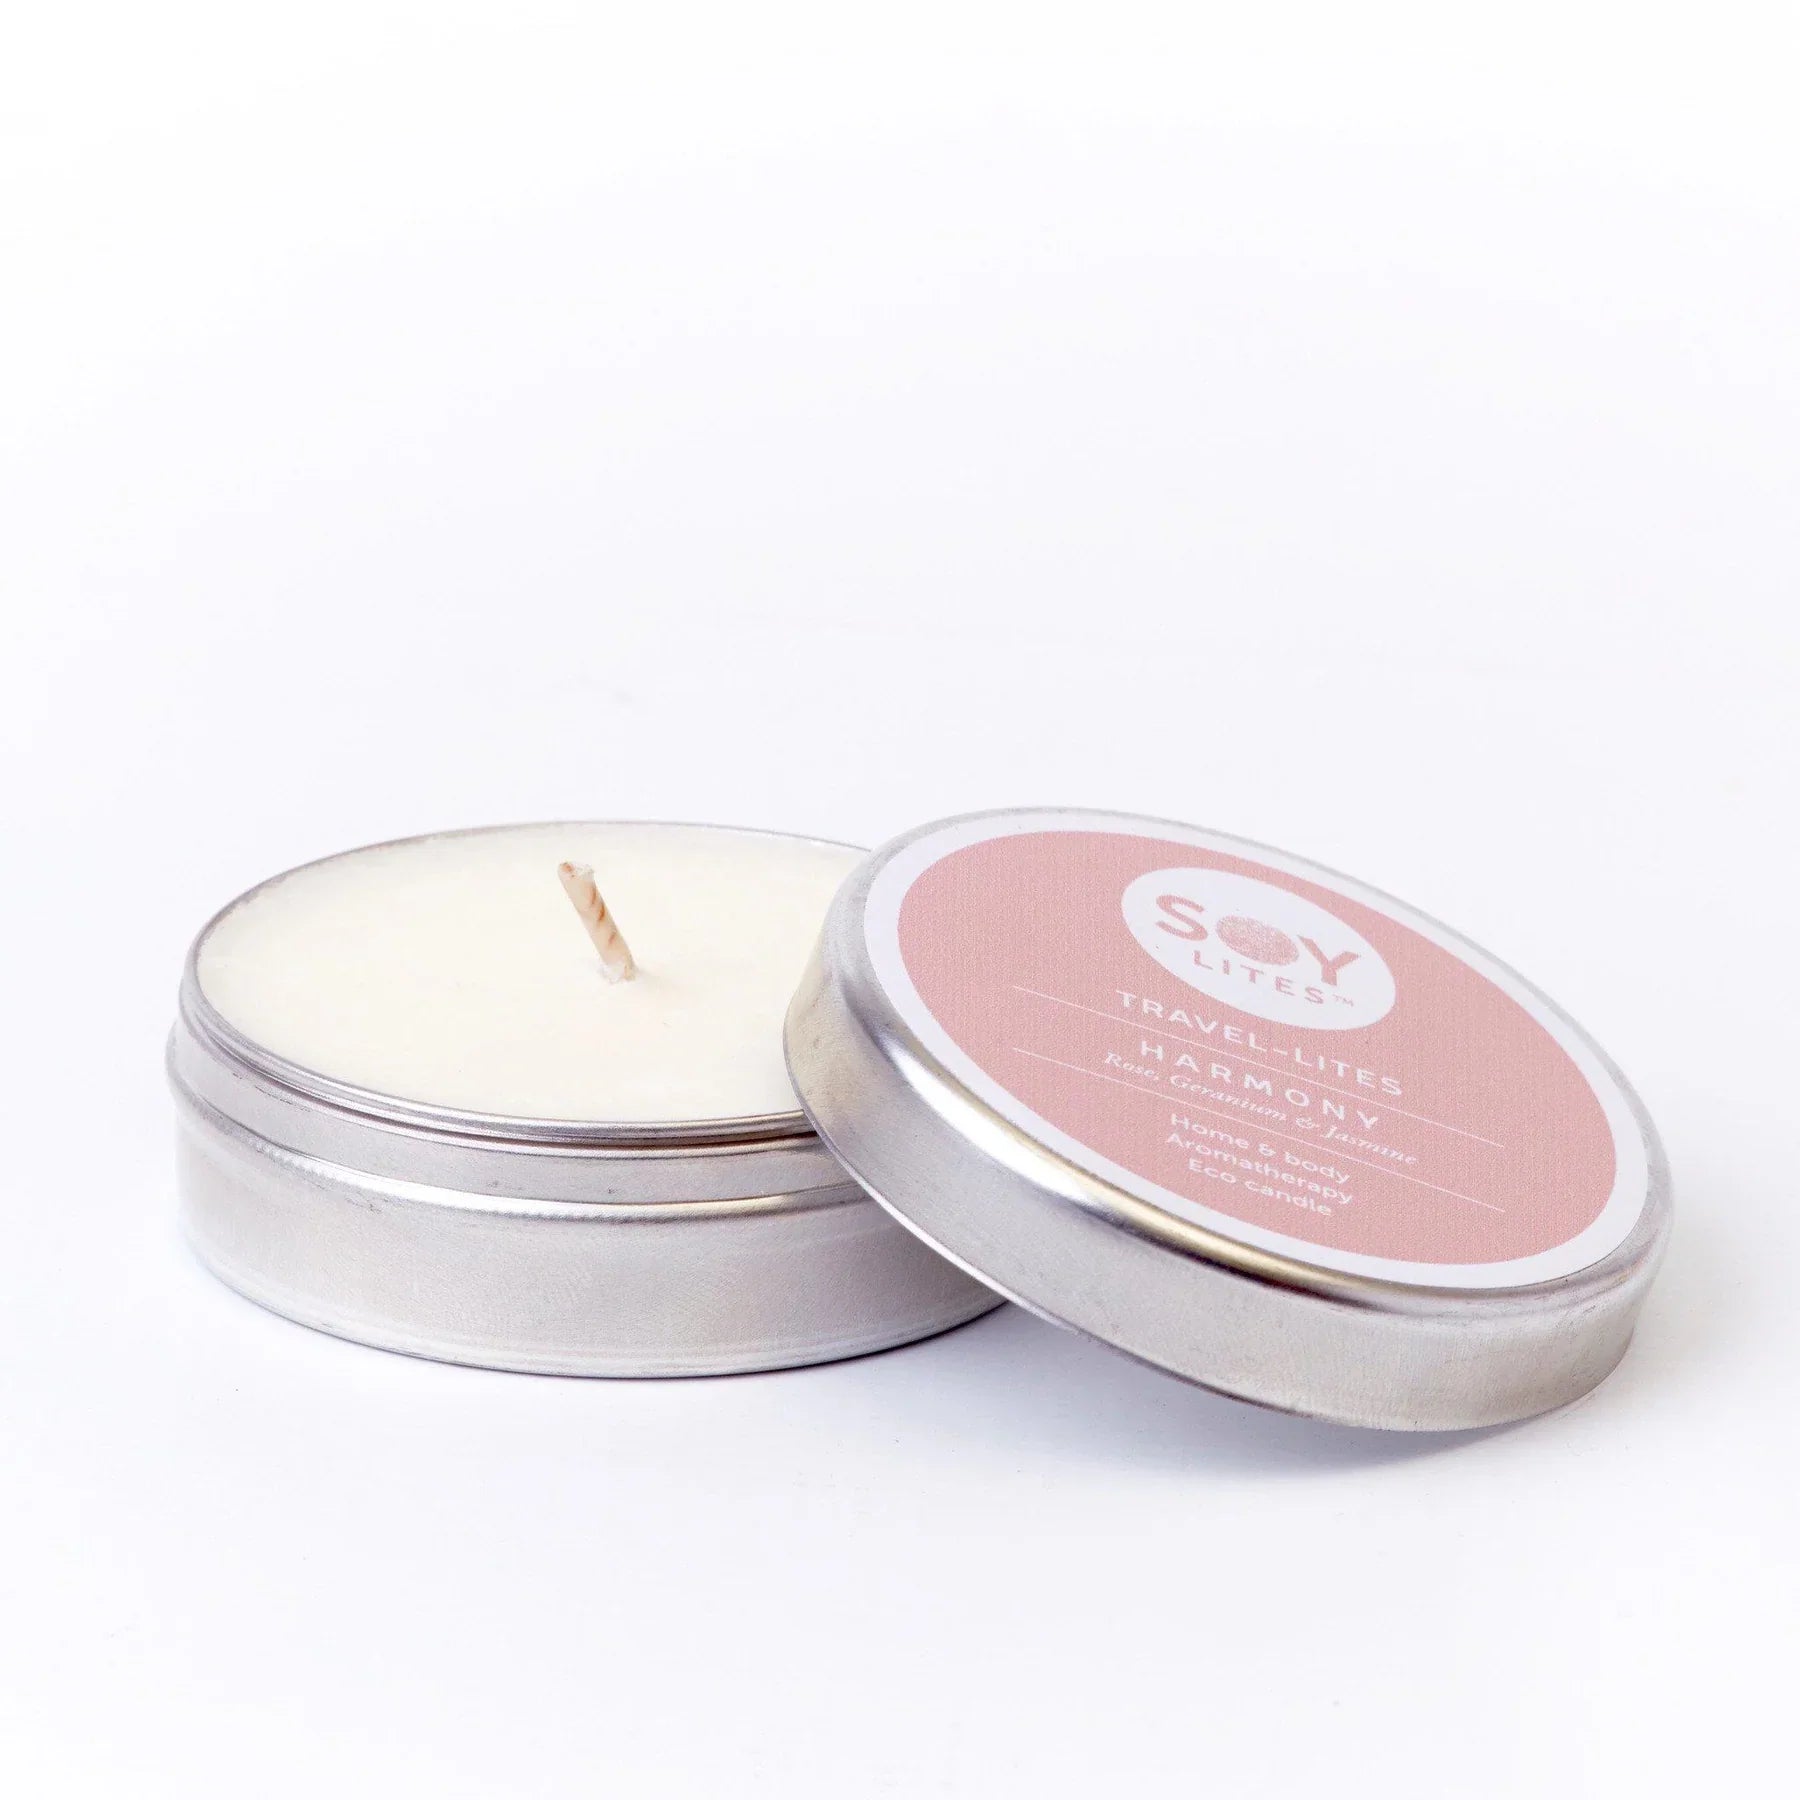 Soylites Moisturising Aromatherapy Candles – Travel-Lite Gift Set